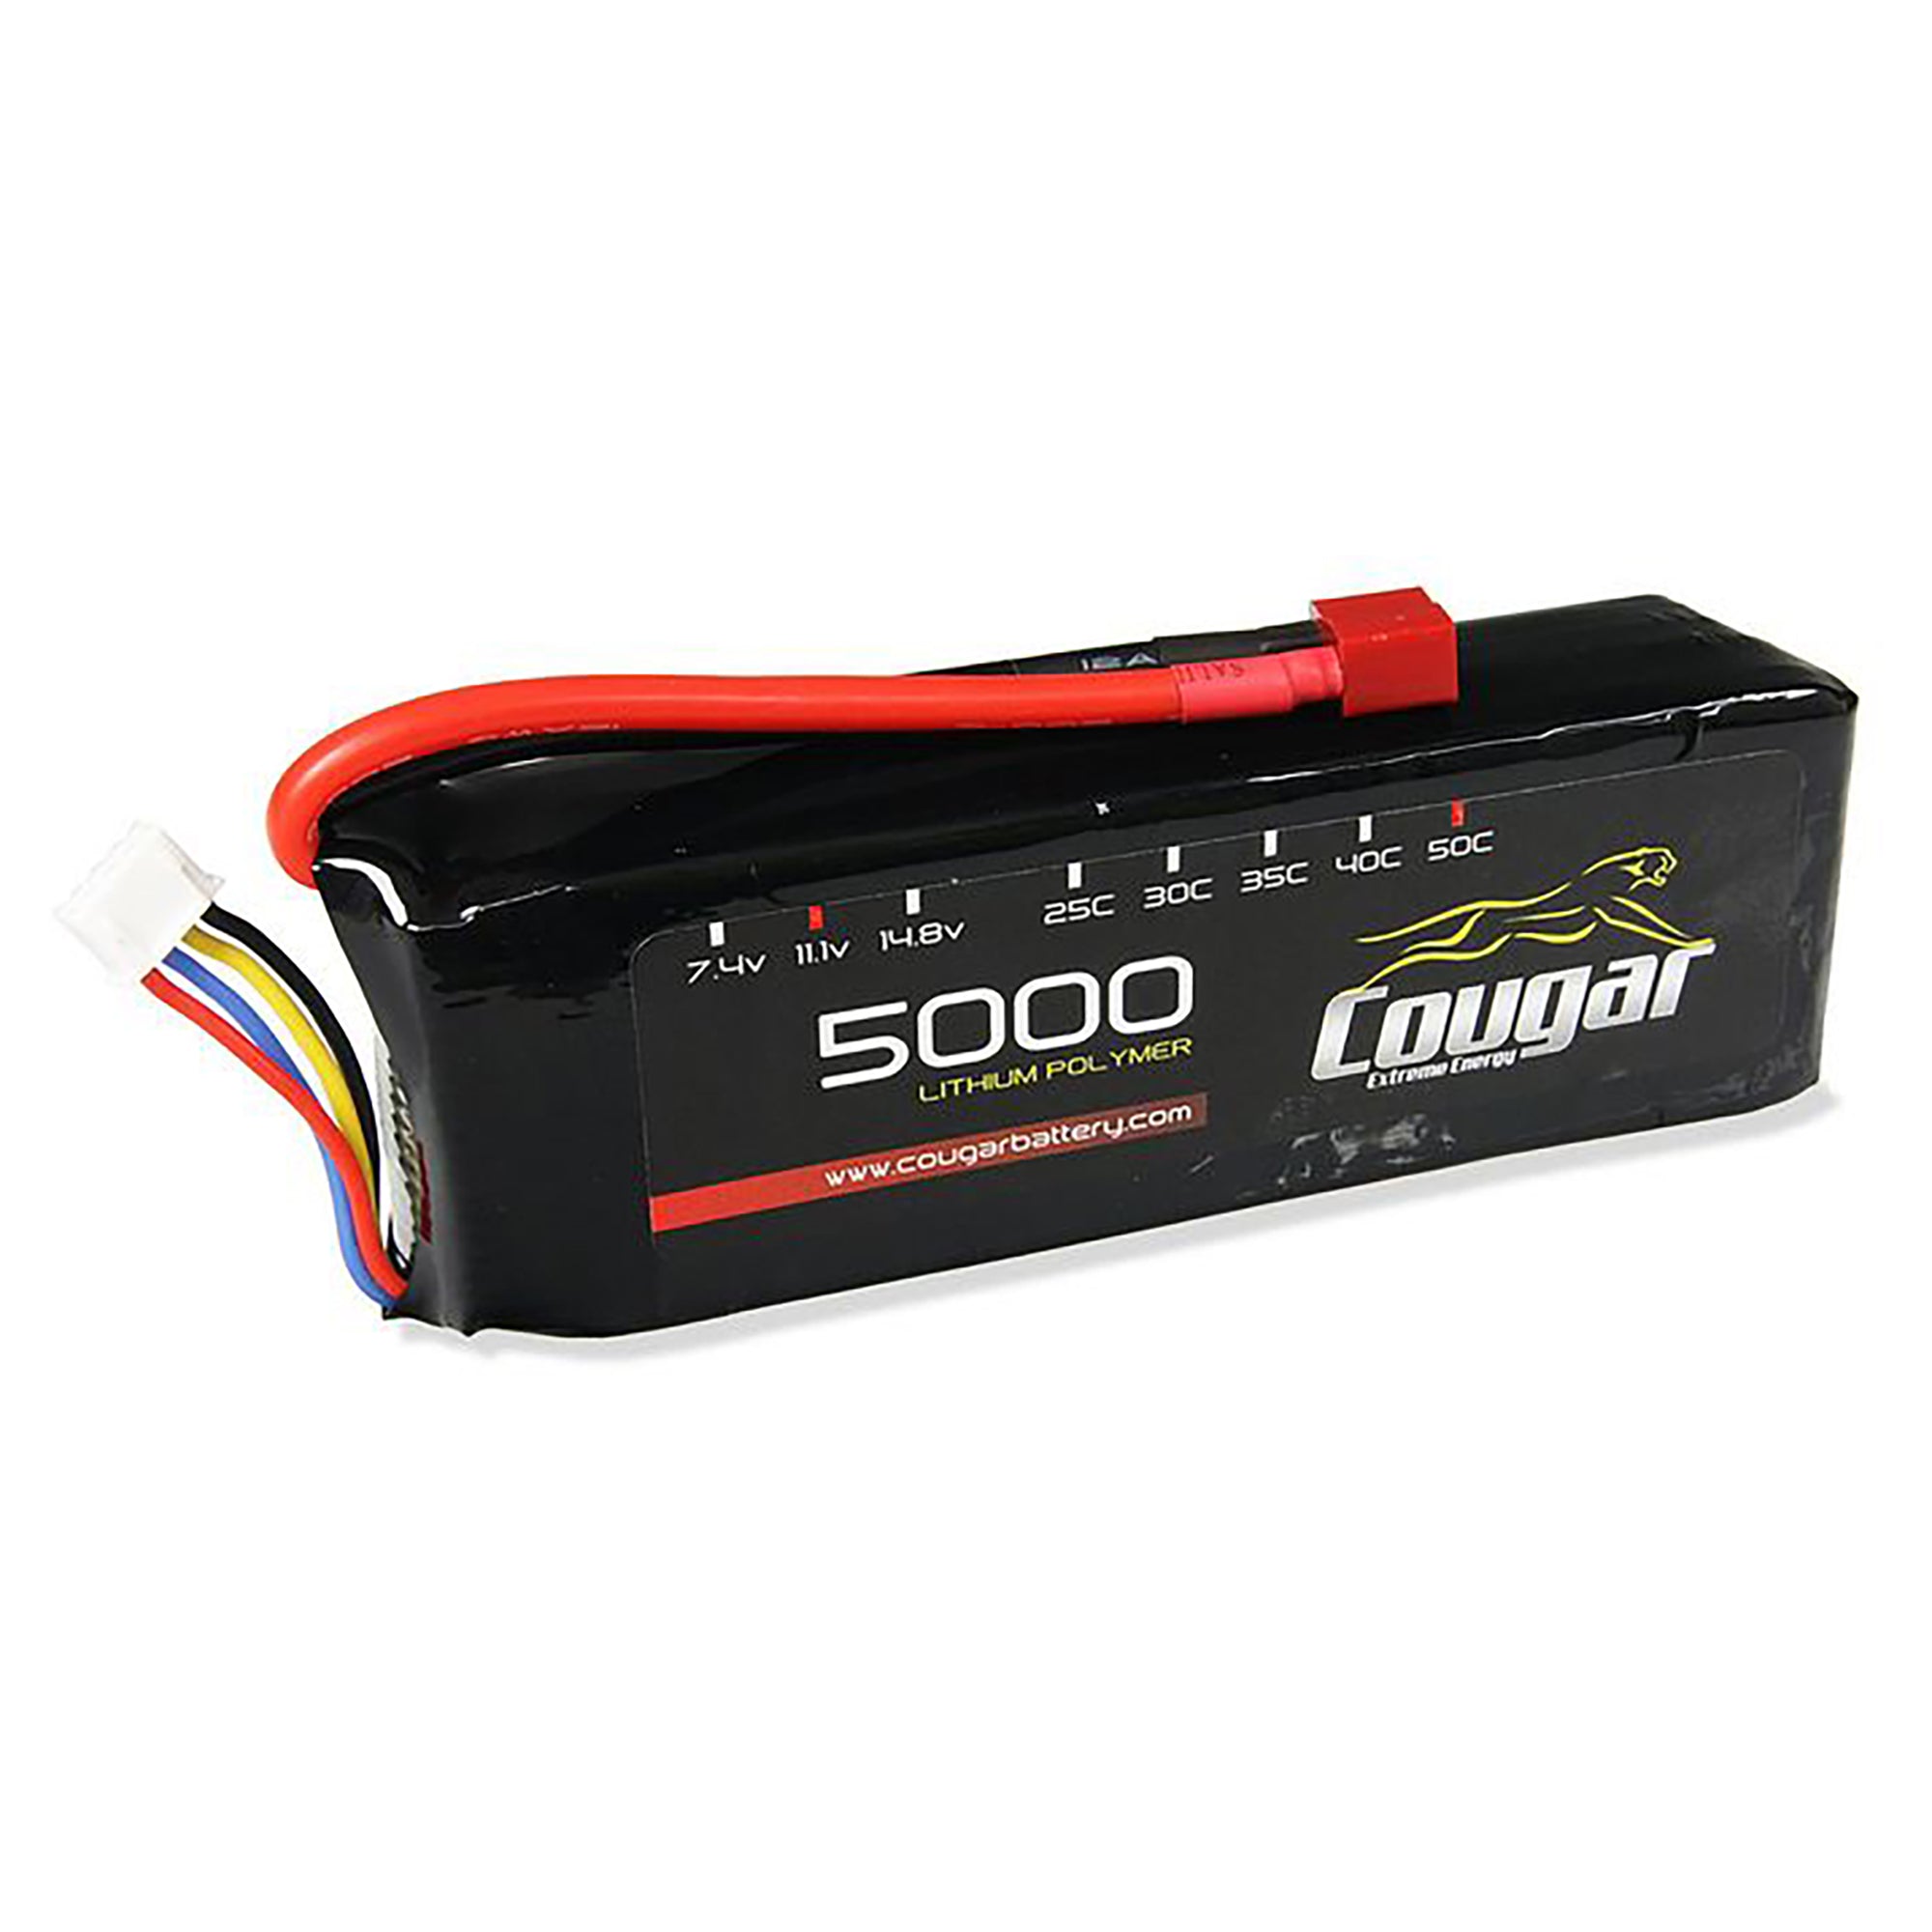 Cougar 5000mAh 11.1v 3S 50C Soft Case LiPo Battery